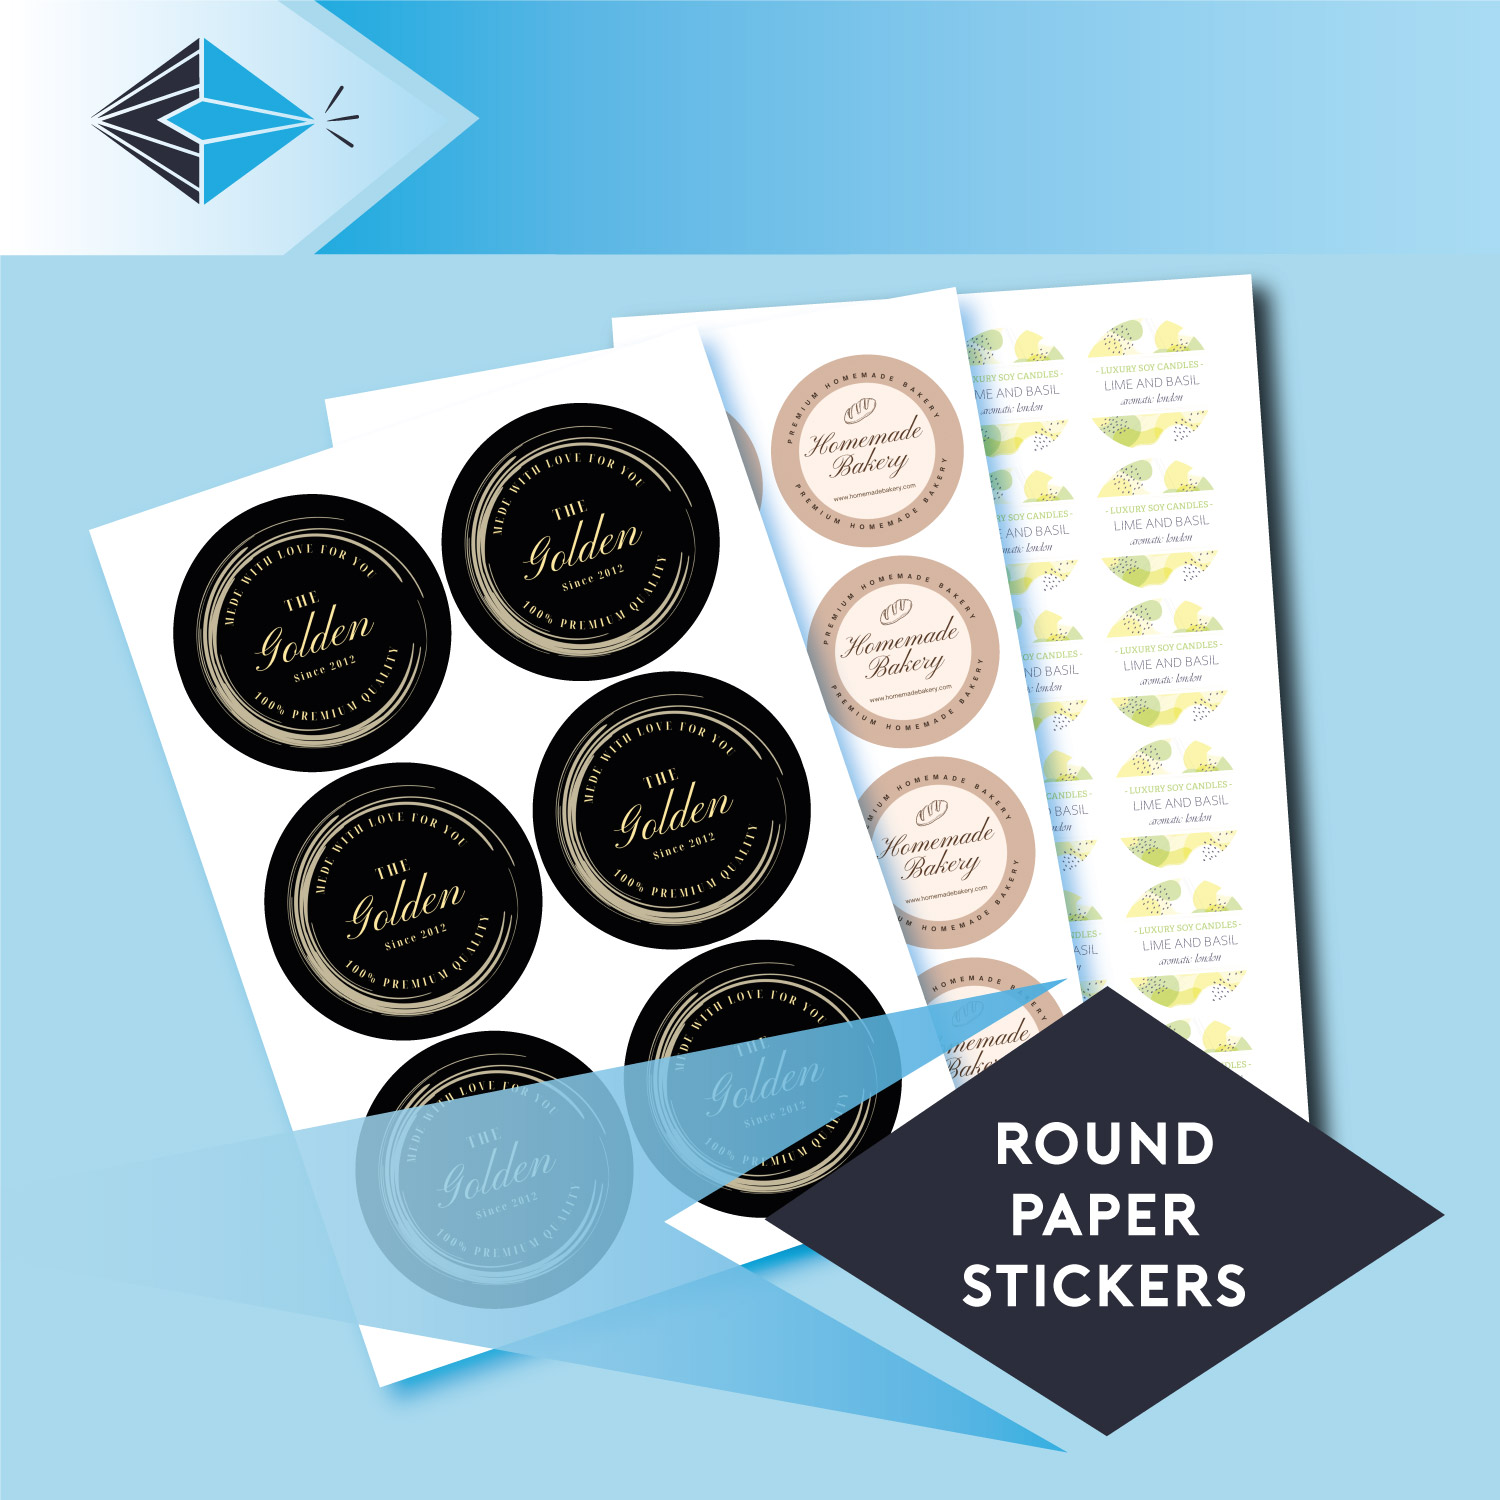 Paper Stickers - A4 Round Sticker Printing